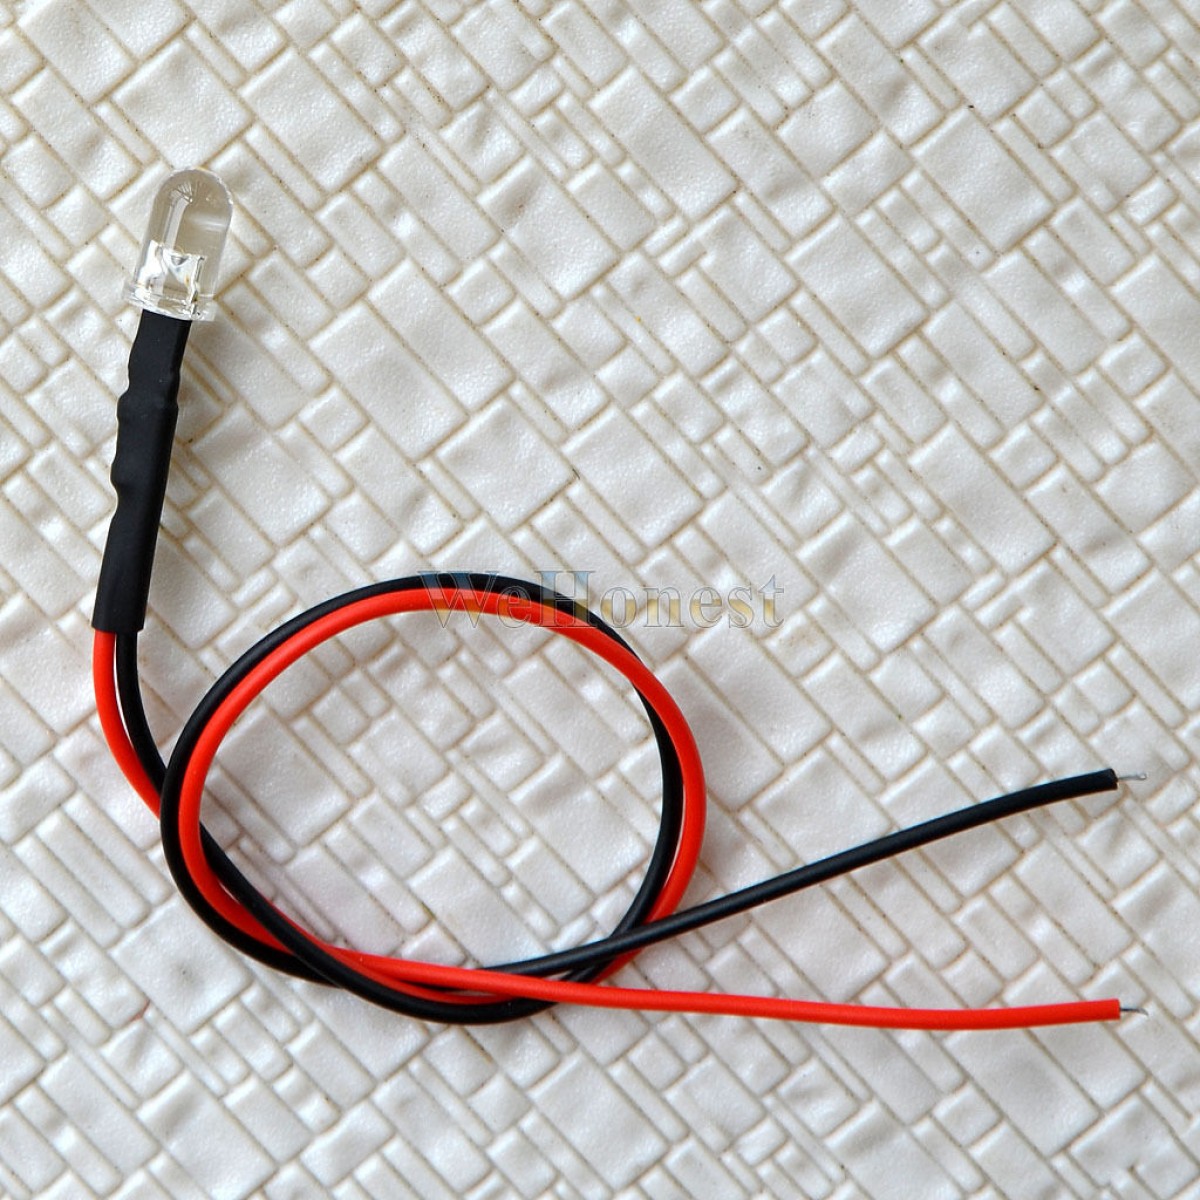 10 x  Pre-Wired 5mm warm white LEDs prewired resistor for 12V - 16V use